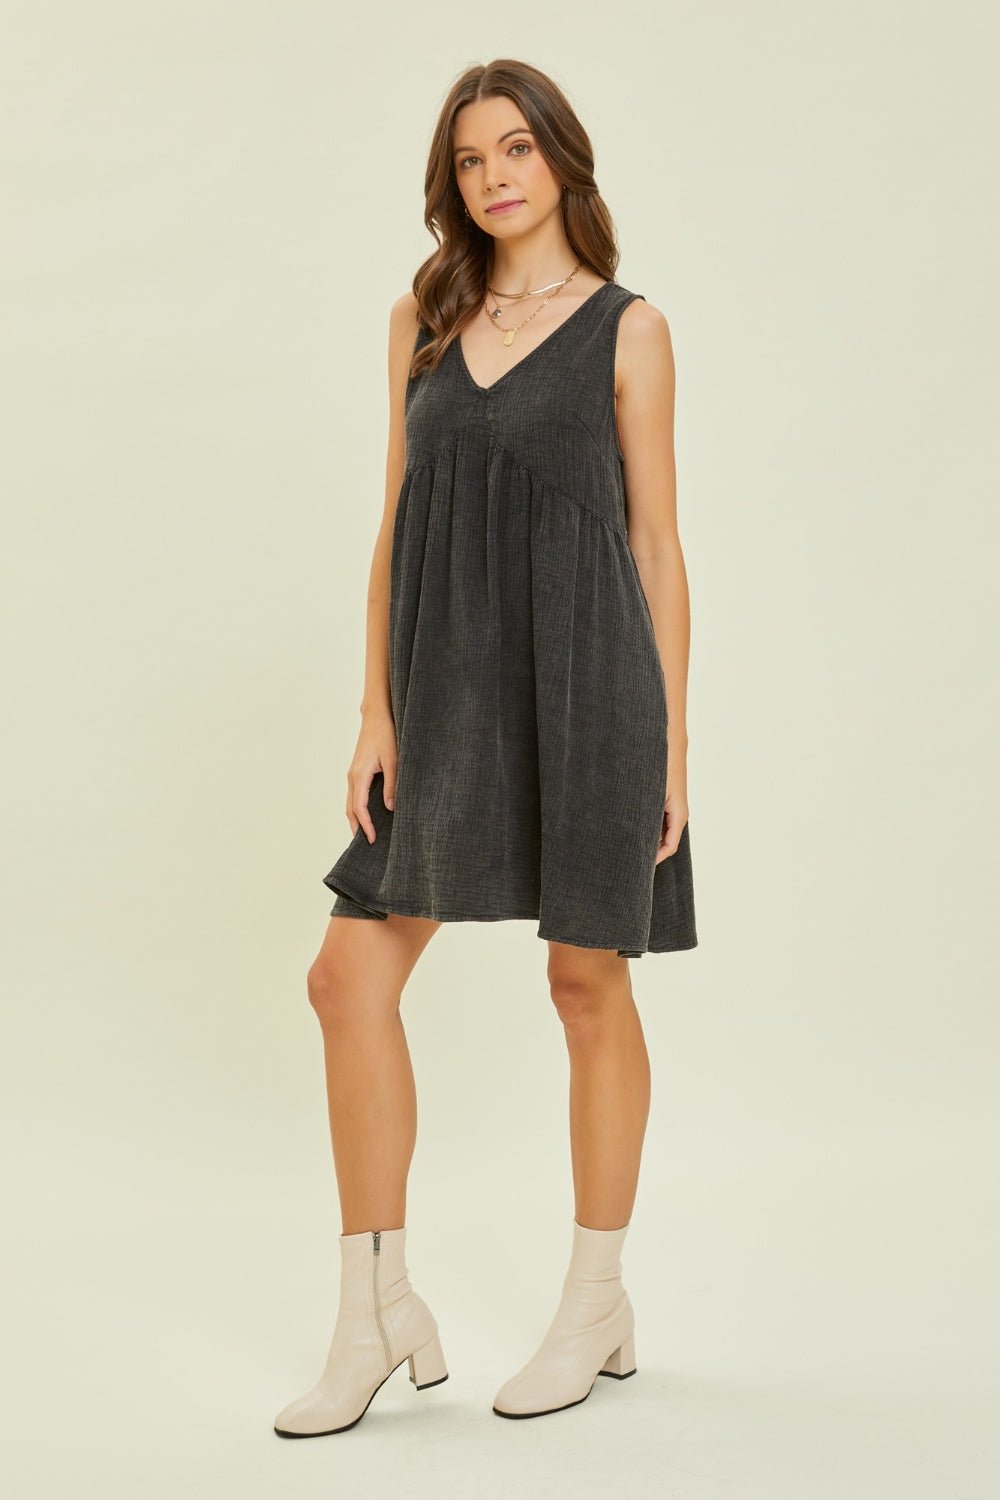 Textured Cotton Sleeveless Mini Dress in BlackMini DressHEYSON